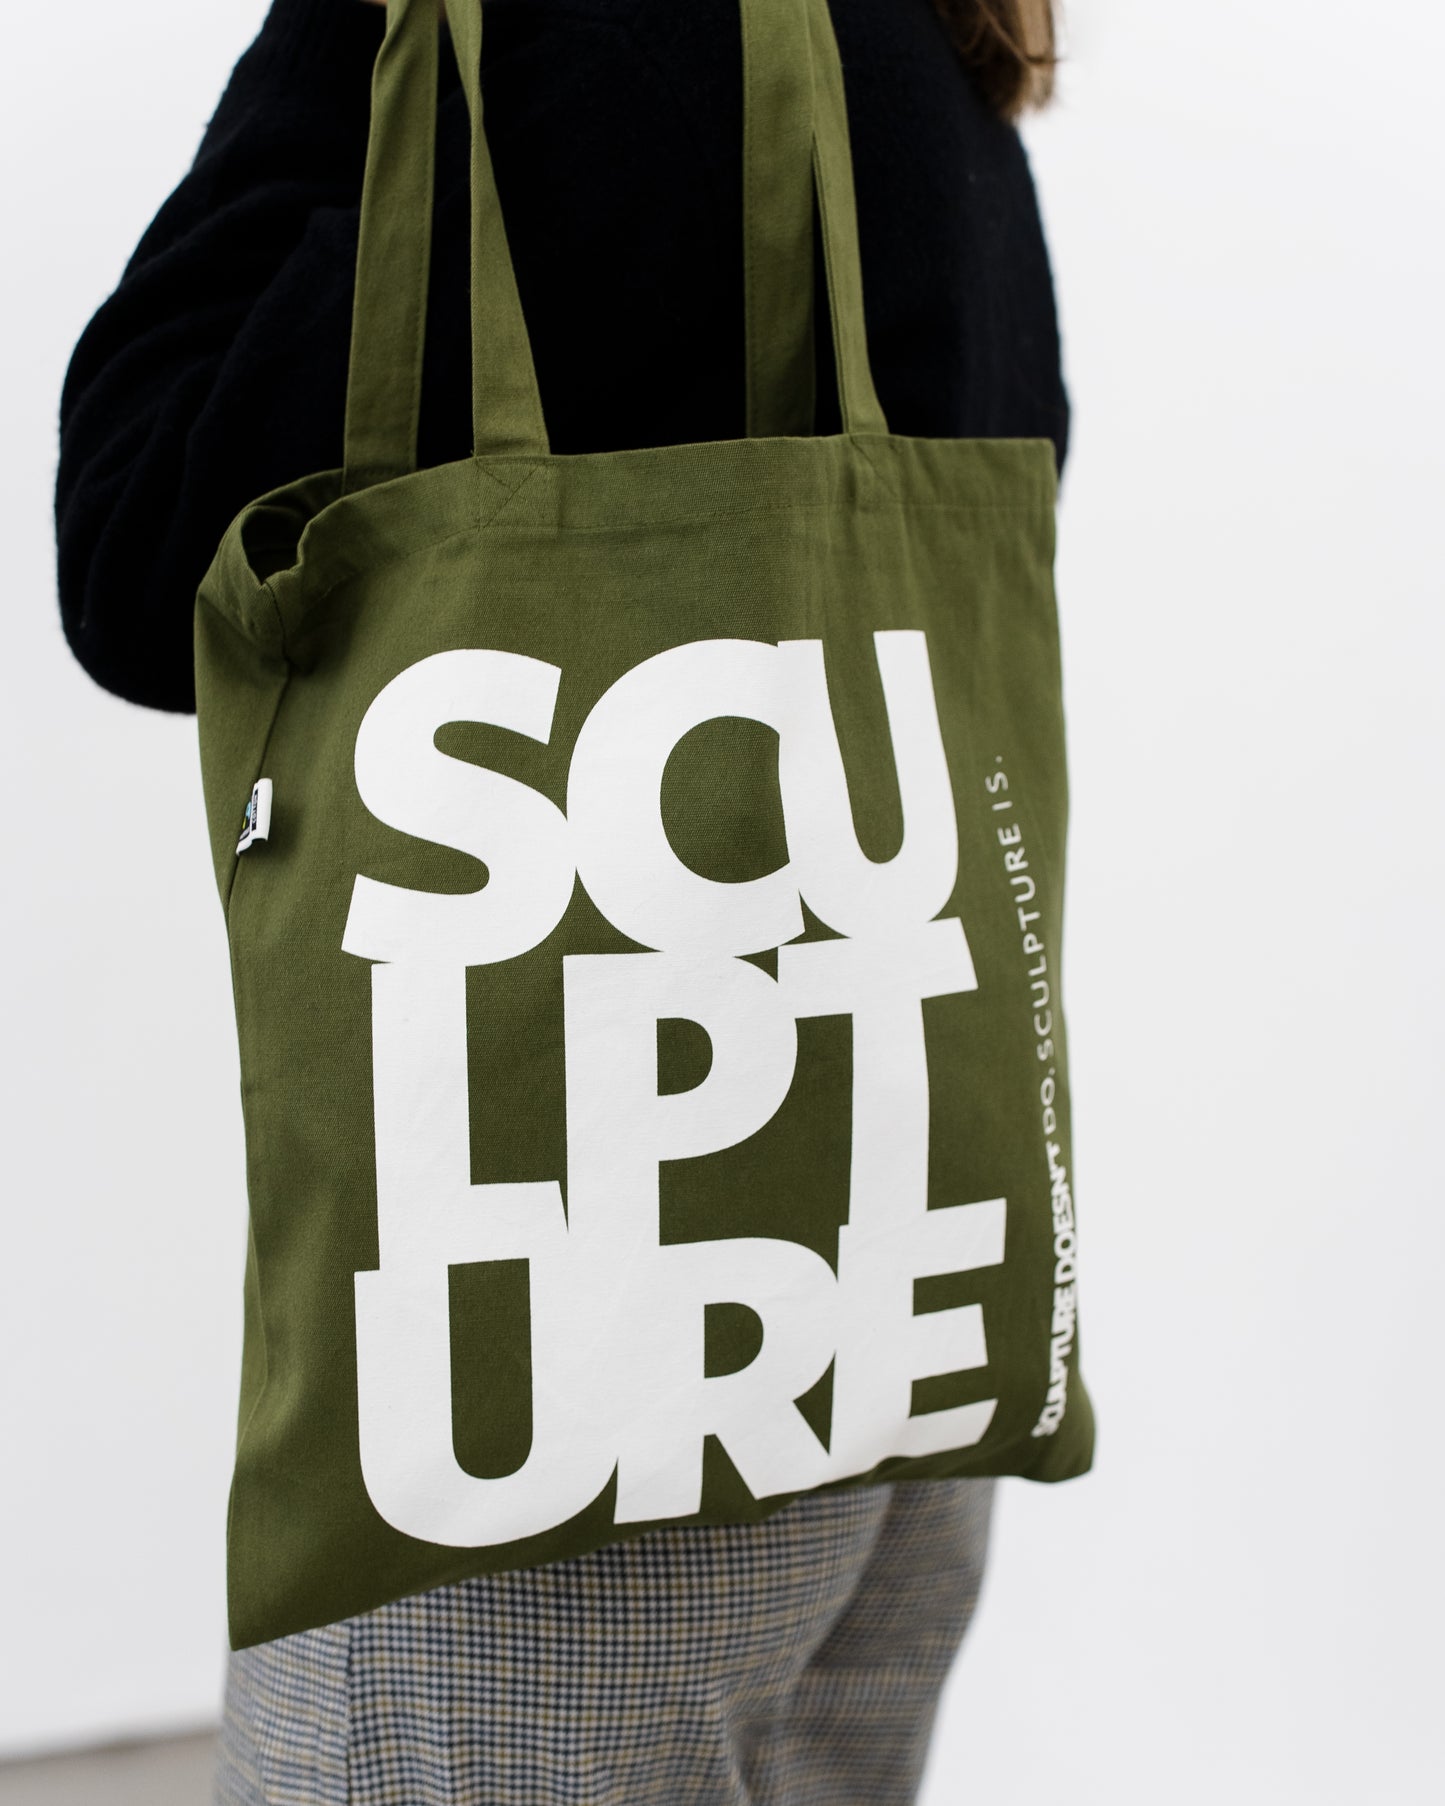 'Sculpture is' Tote Bag